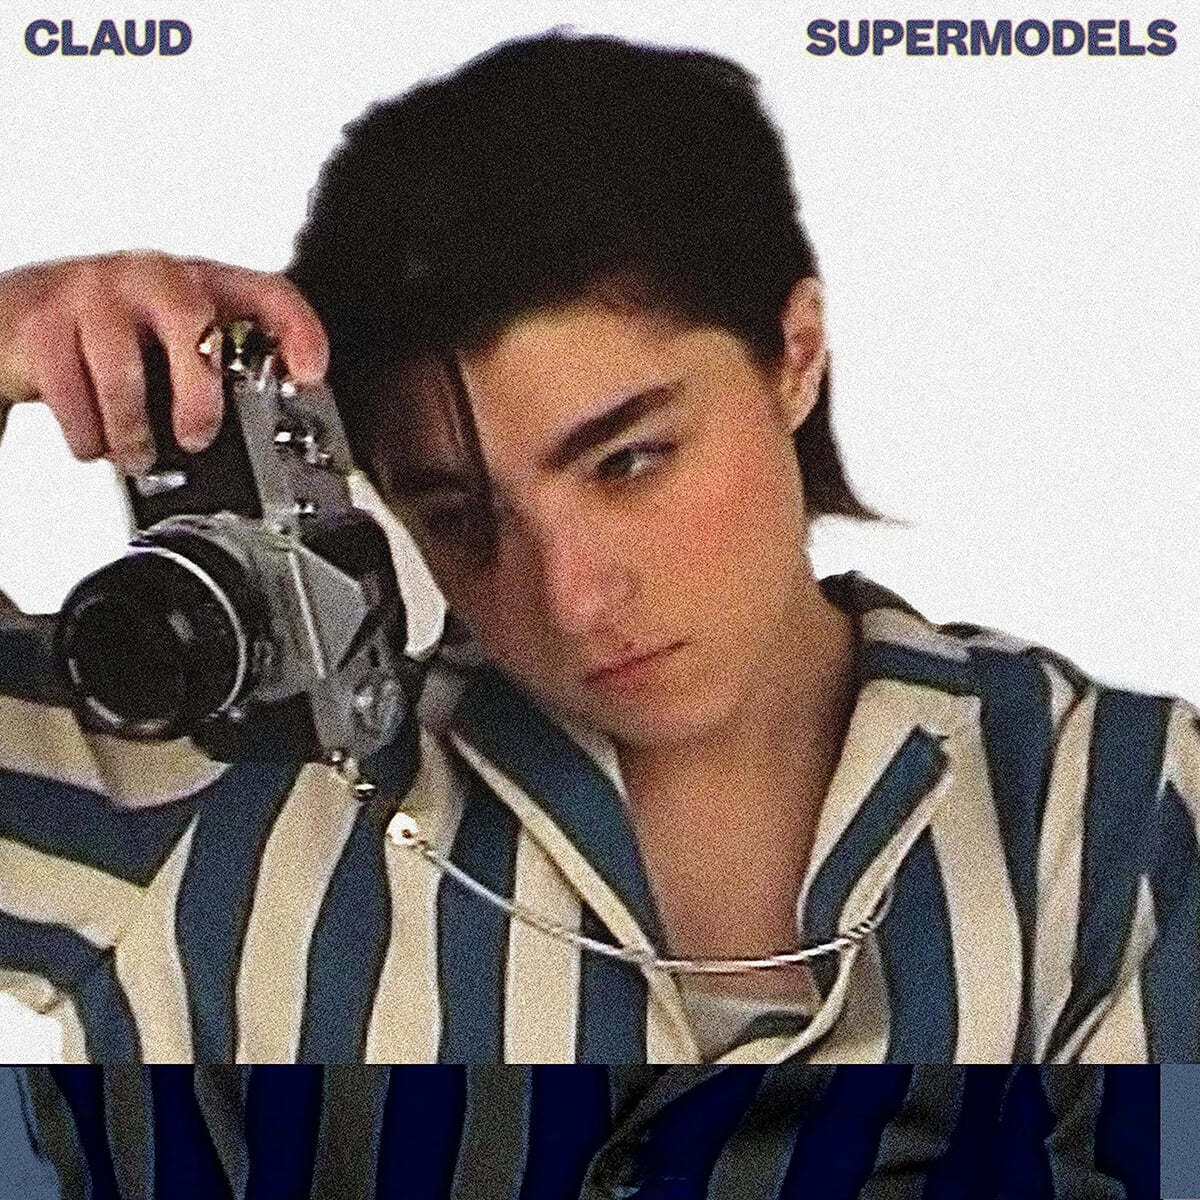 Claud (클로드) - 2집 Supermodels [클라우드 컬러 LP]